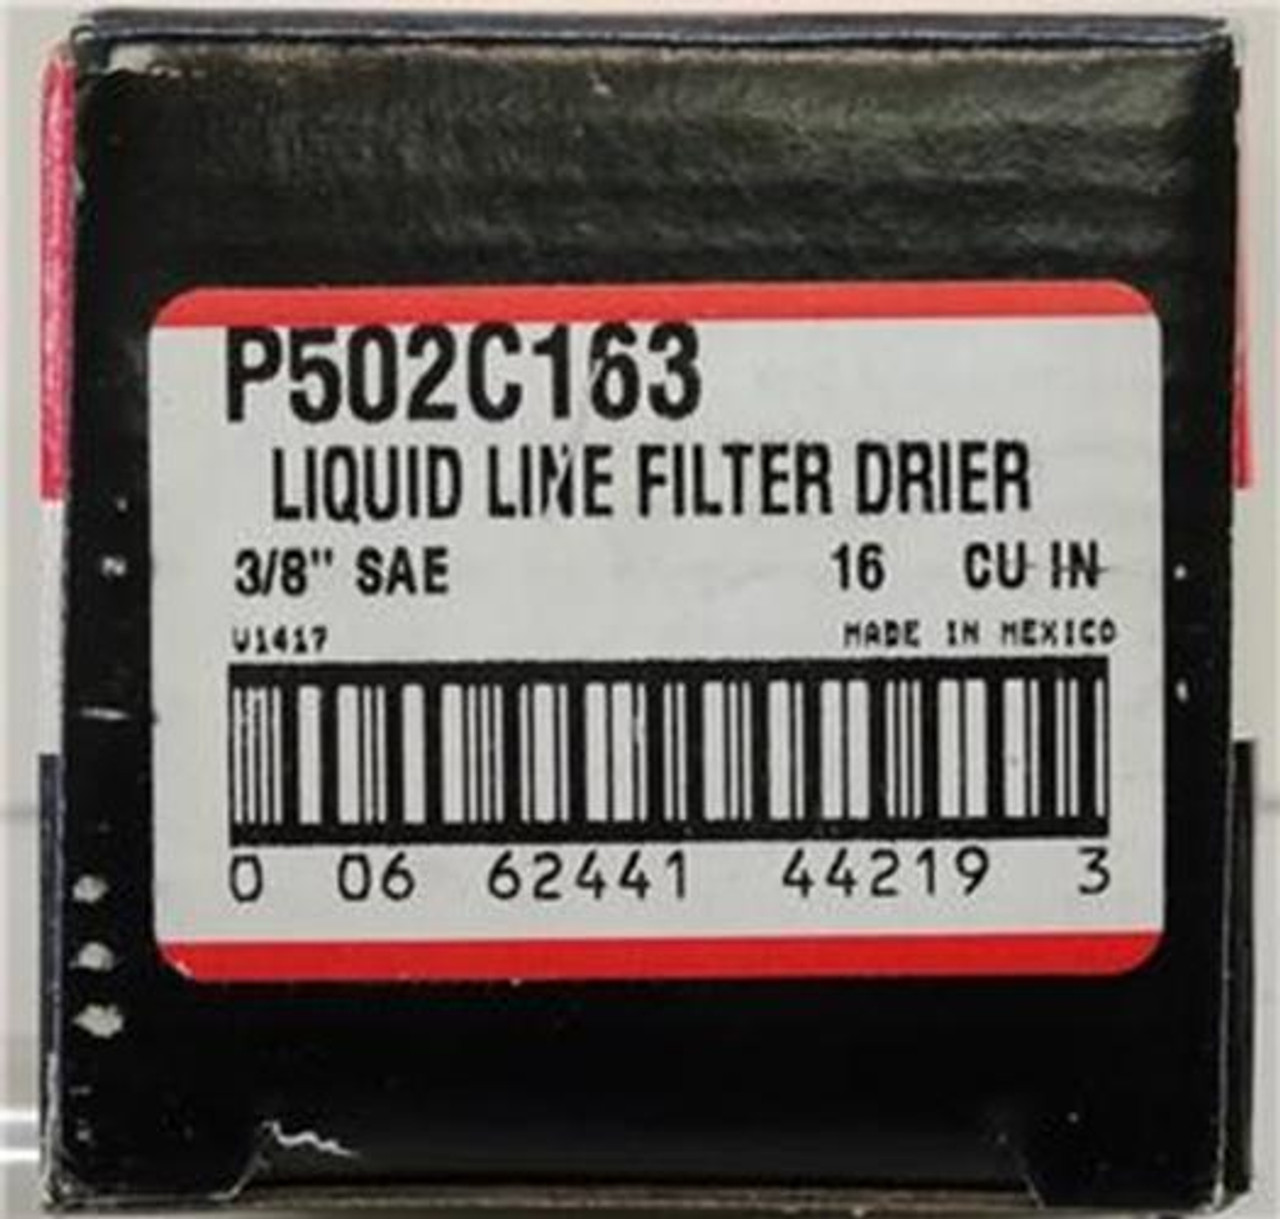 Totaline/Carrier Liquid Line Filter Drier - P502C163